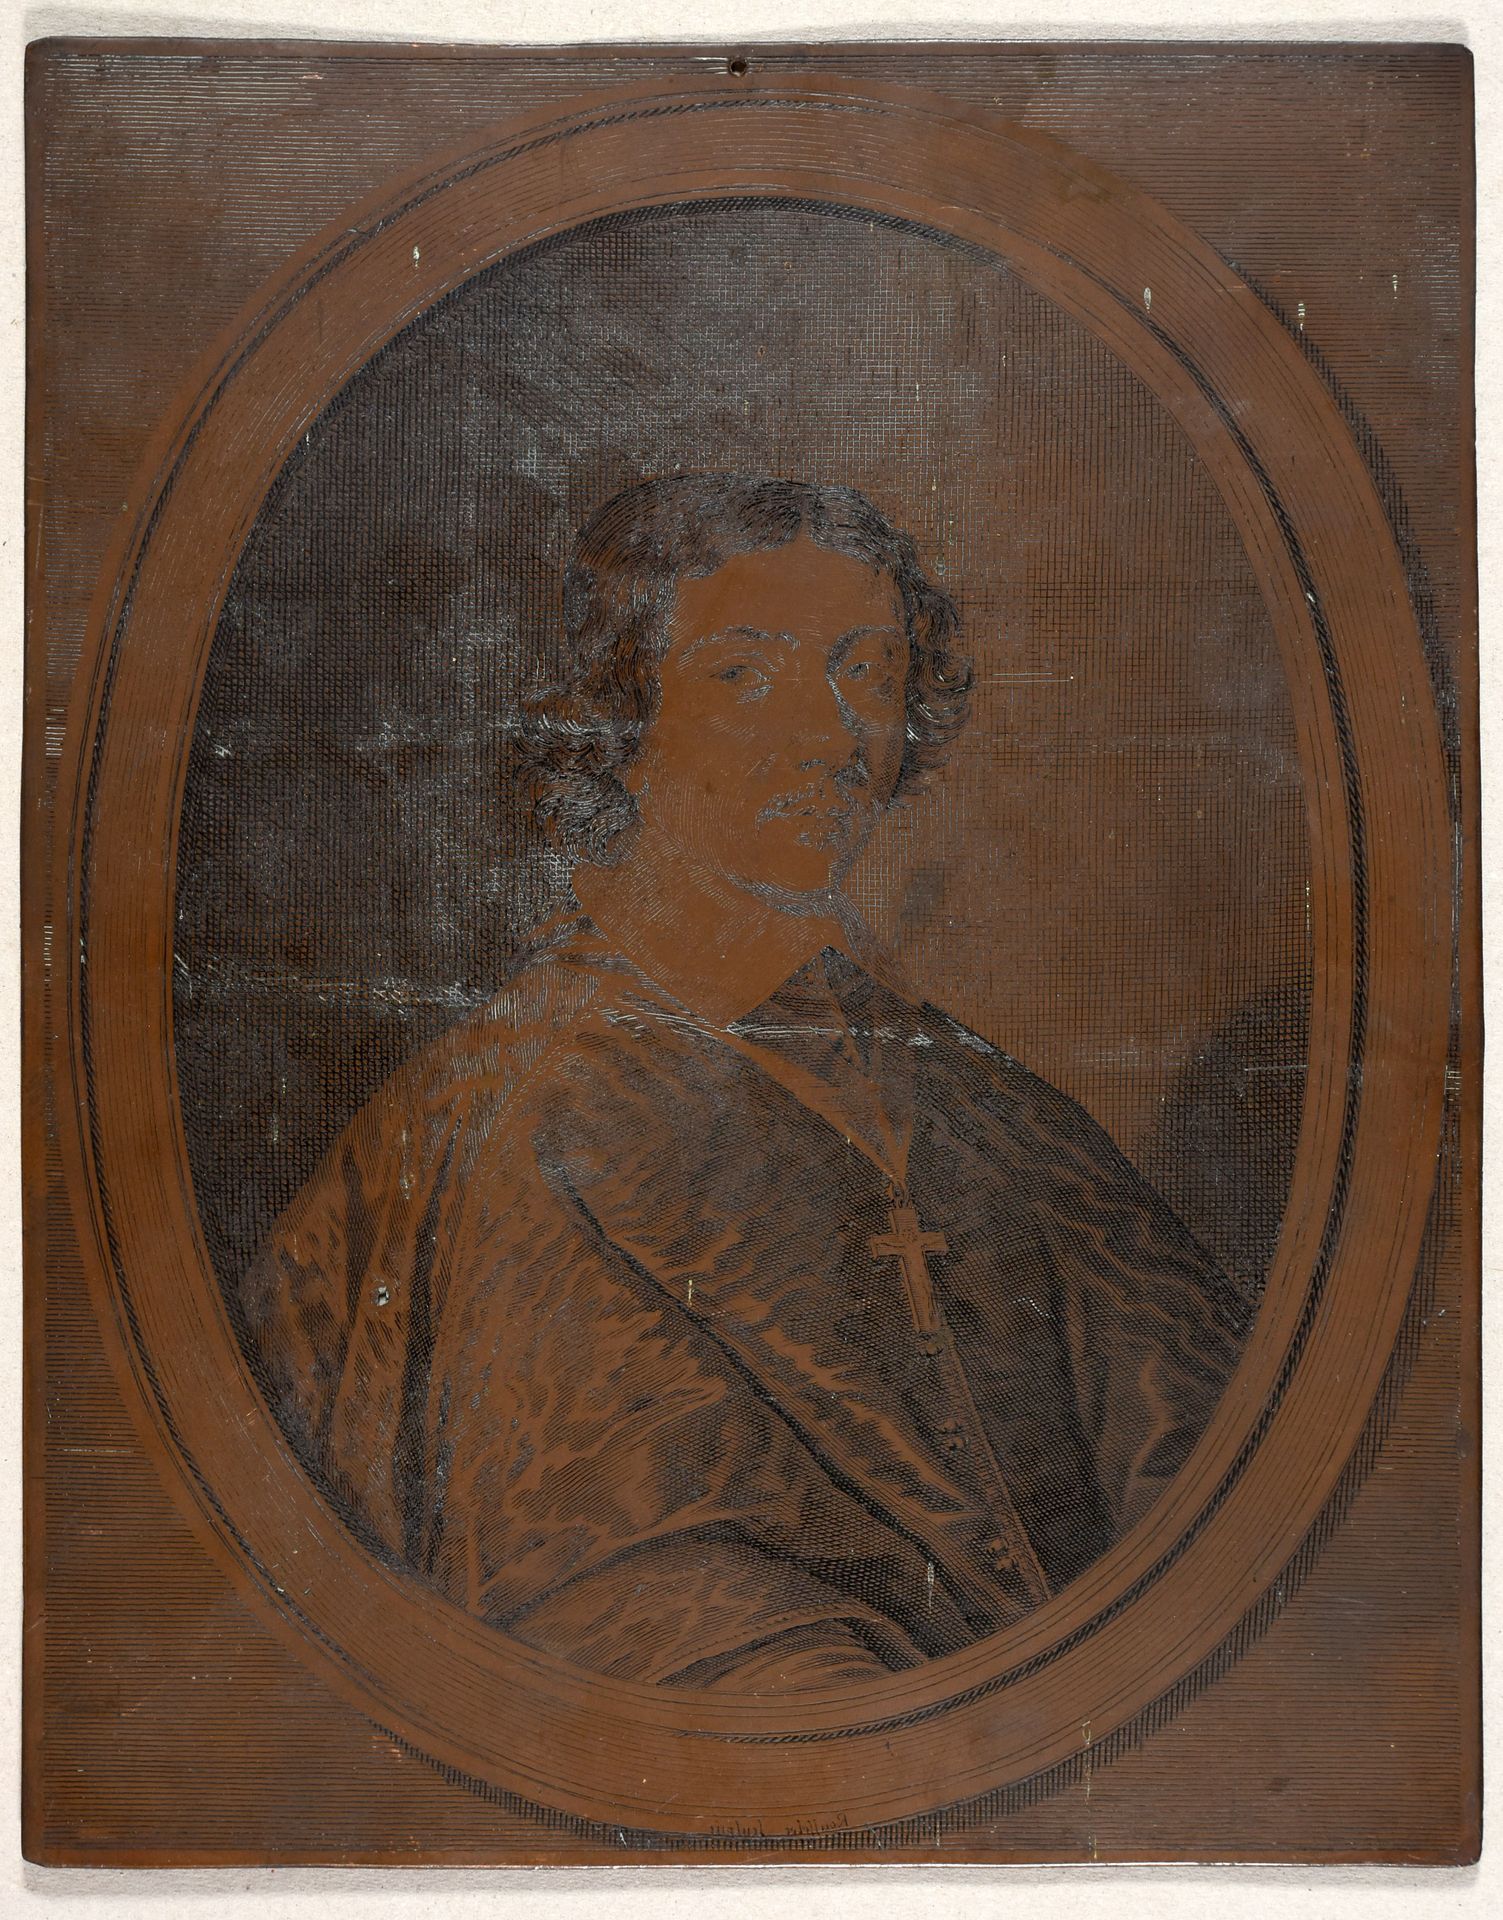 Rousselet, Gilles ROUSSELET, Gilles Portrait of Pierre de Bertier. Ca. 1650 Copp&hellip;